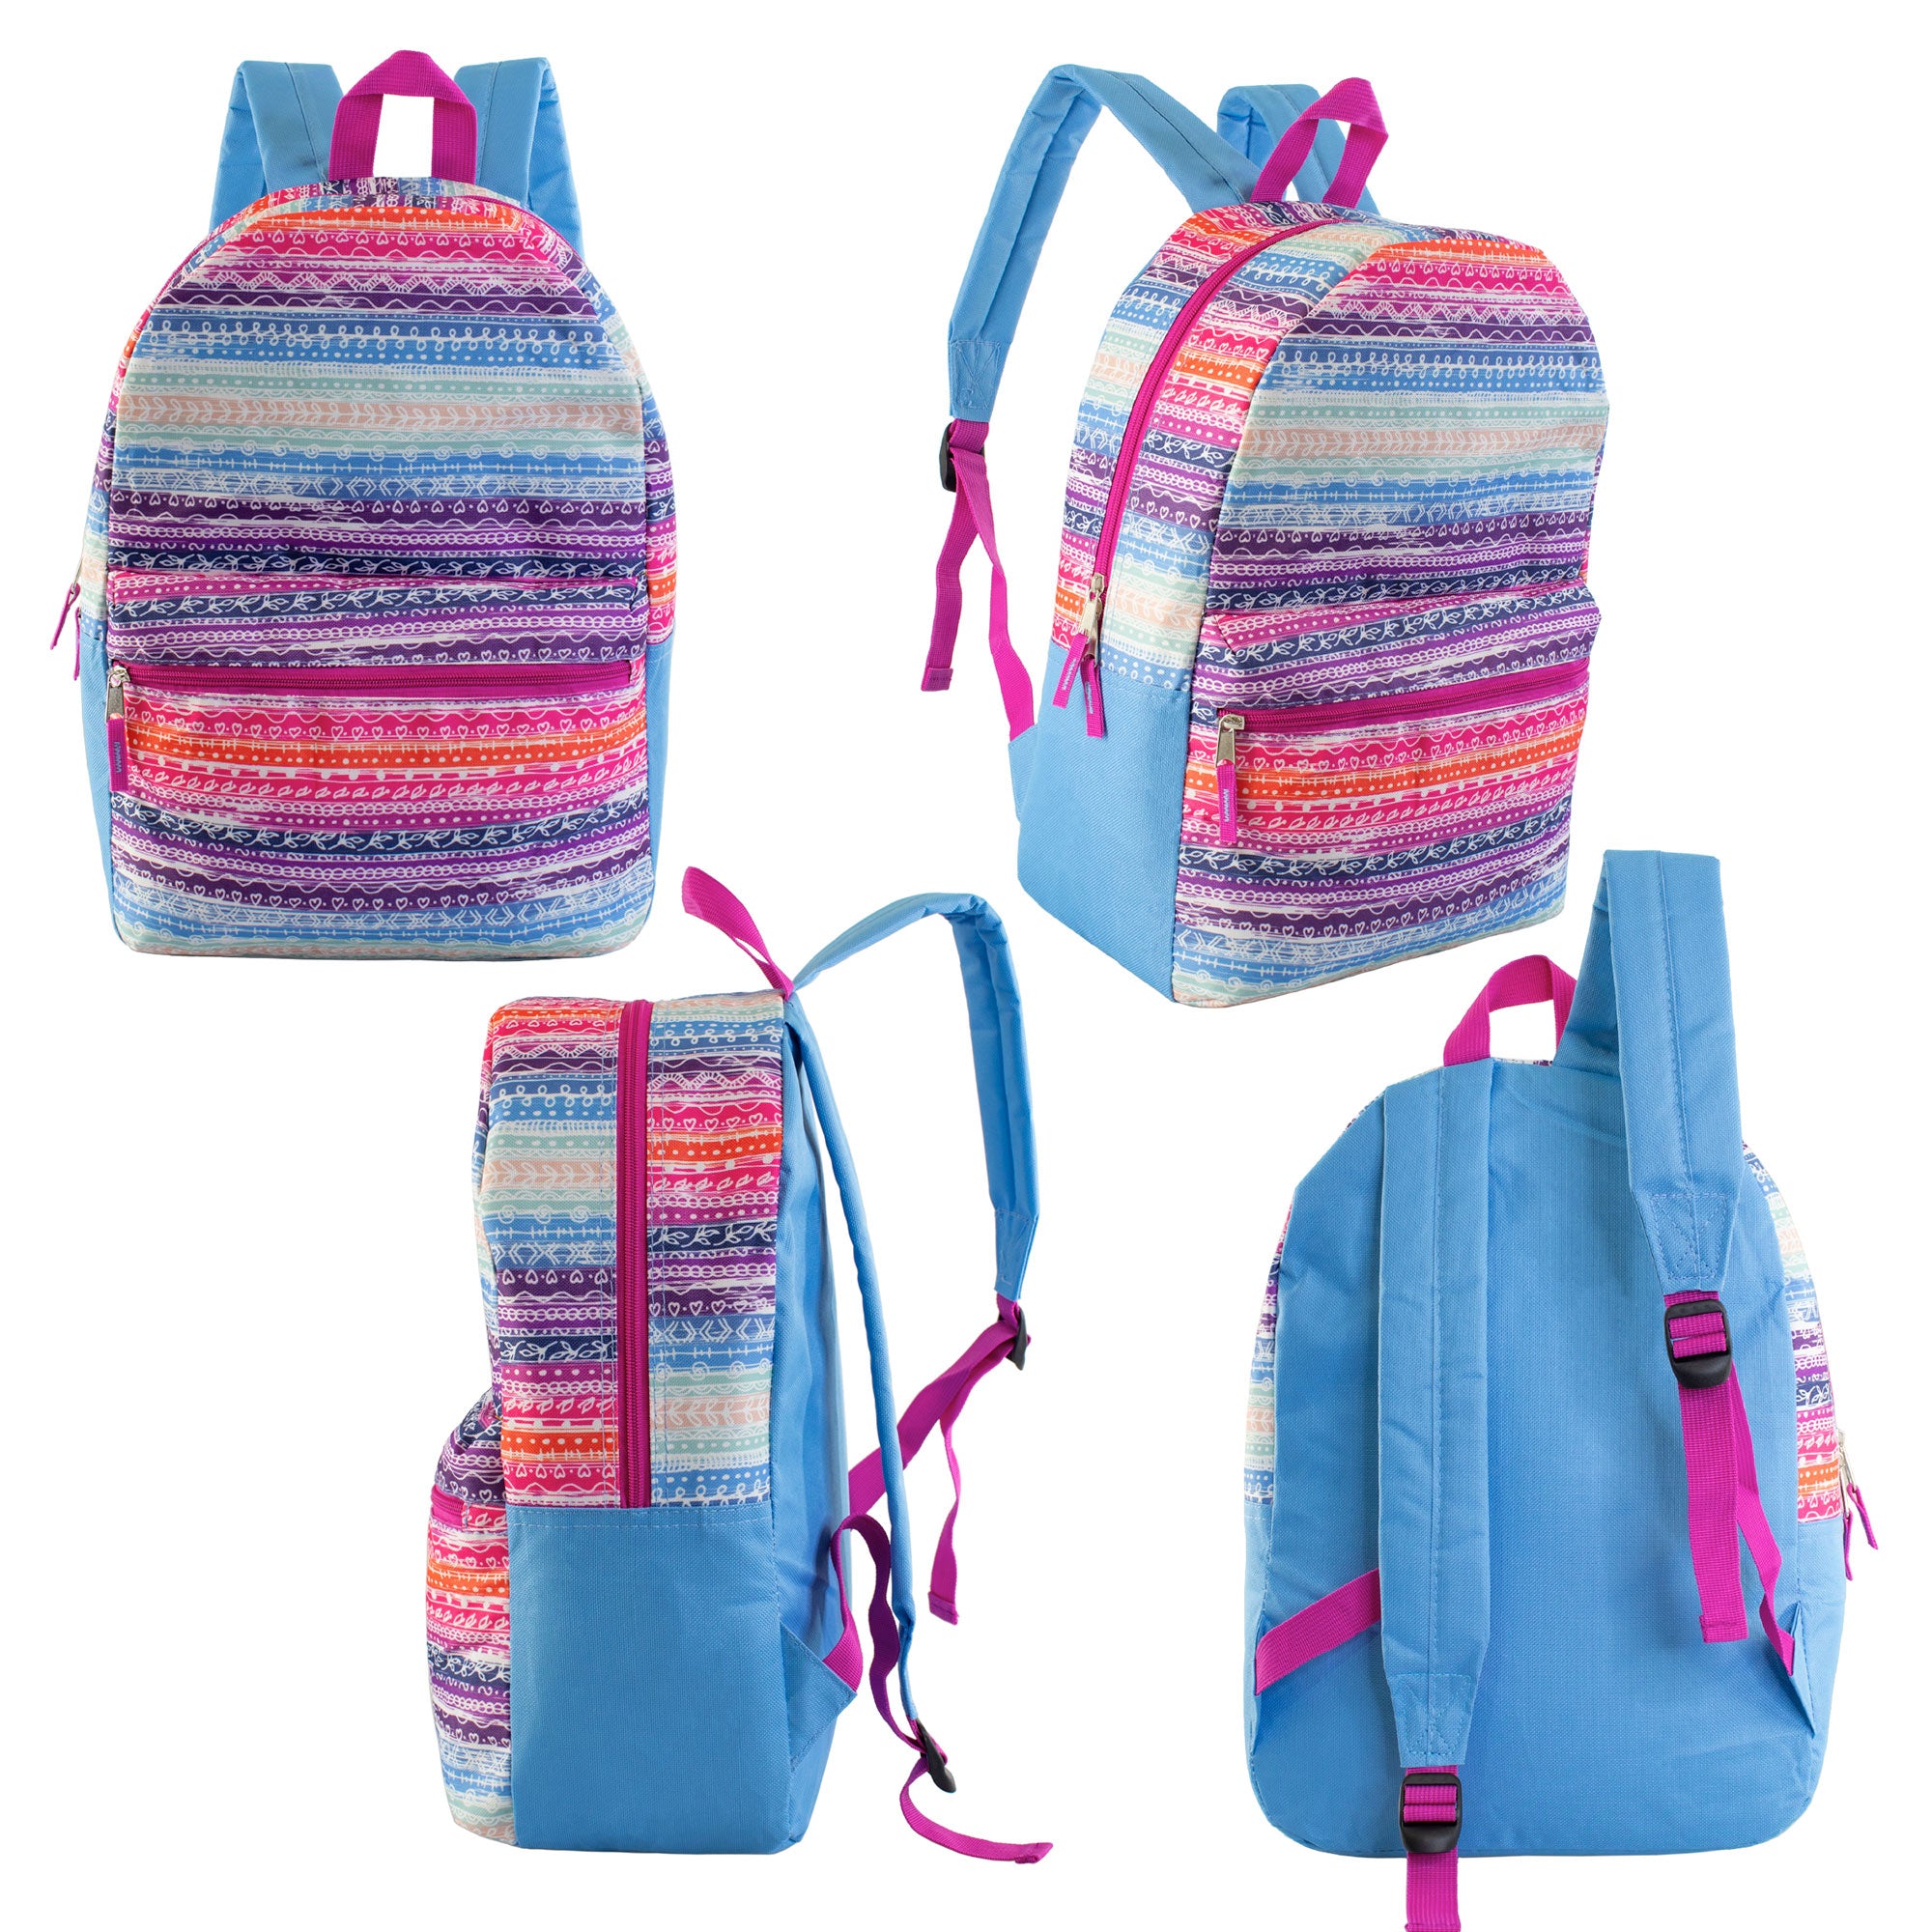 17" Wholesale Backpacks In 12 Assorted Prints & Colors - Bulk Case Of 24 Backpacks